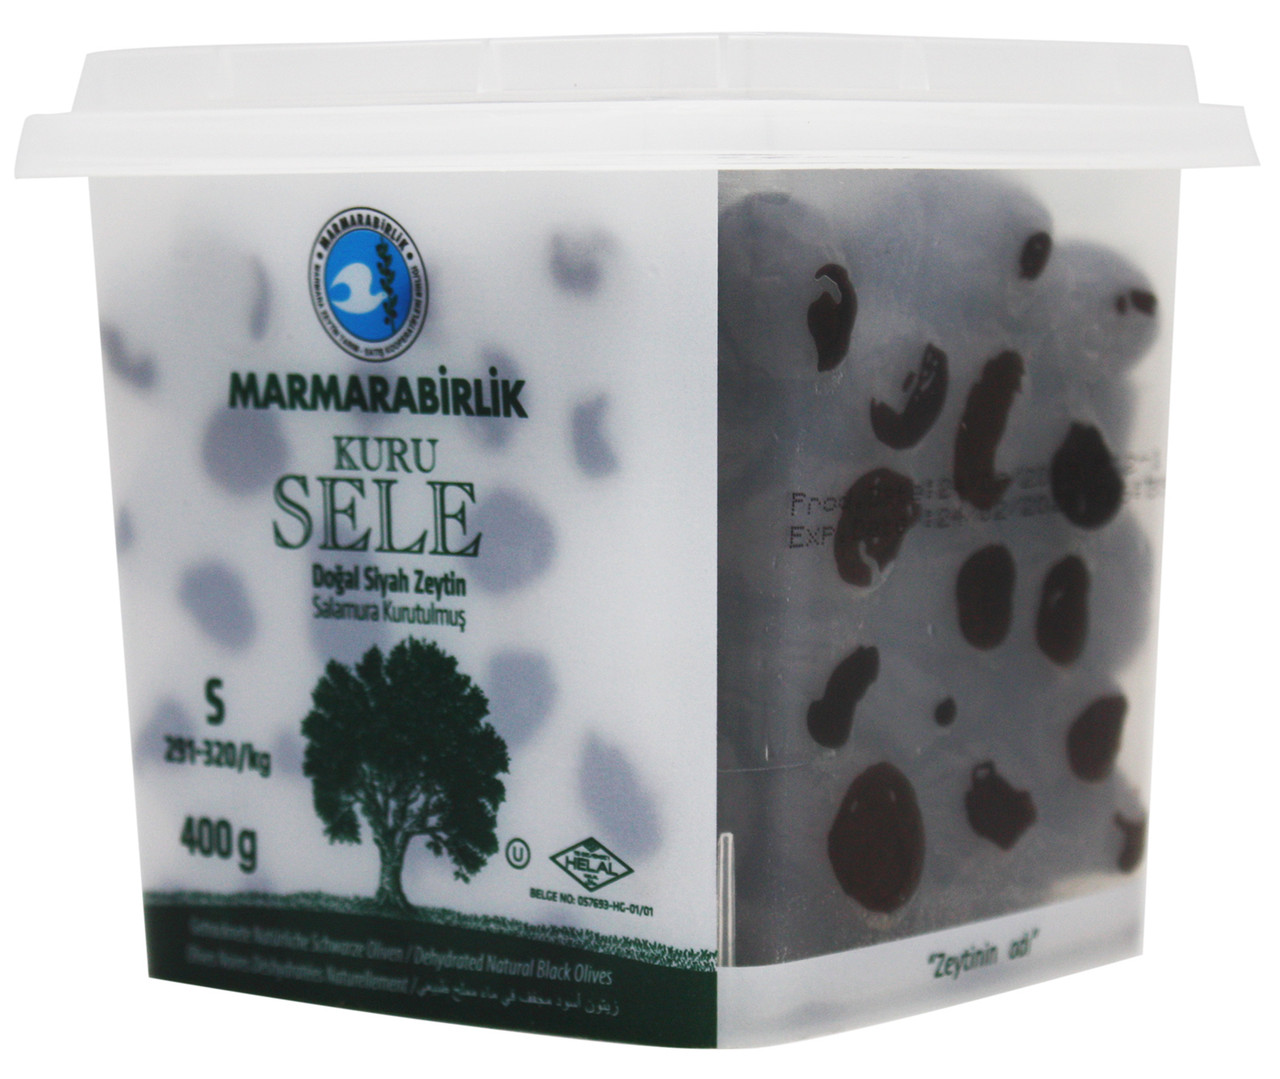 Маслины вяленые Marmarabirlik kuru sele S, 800 гр.(Турция)